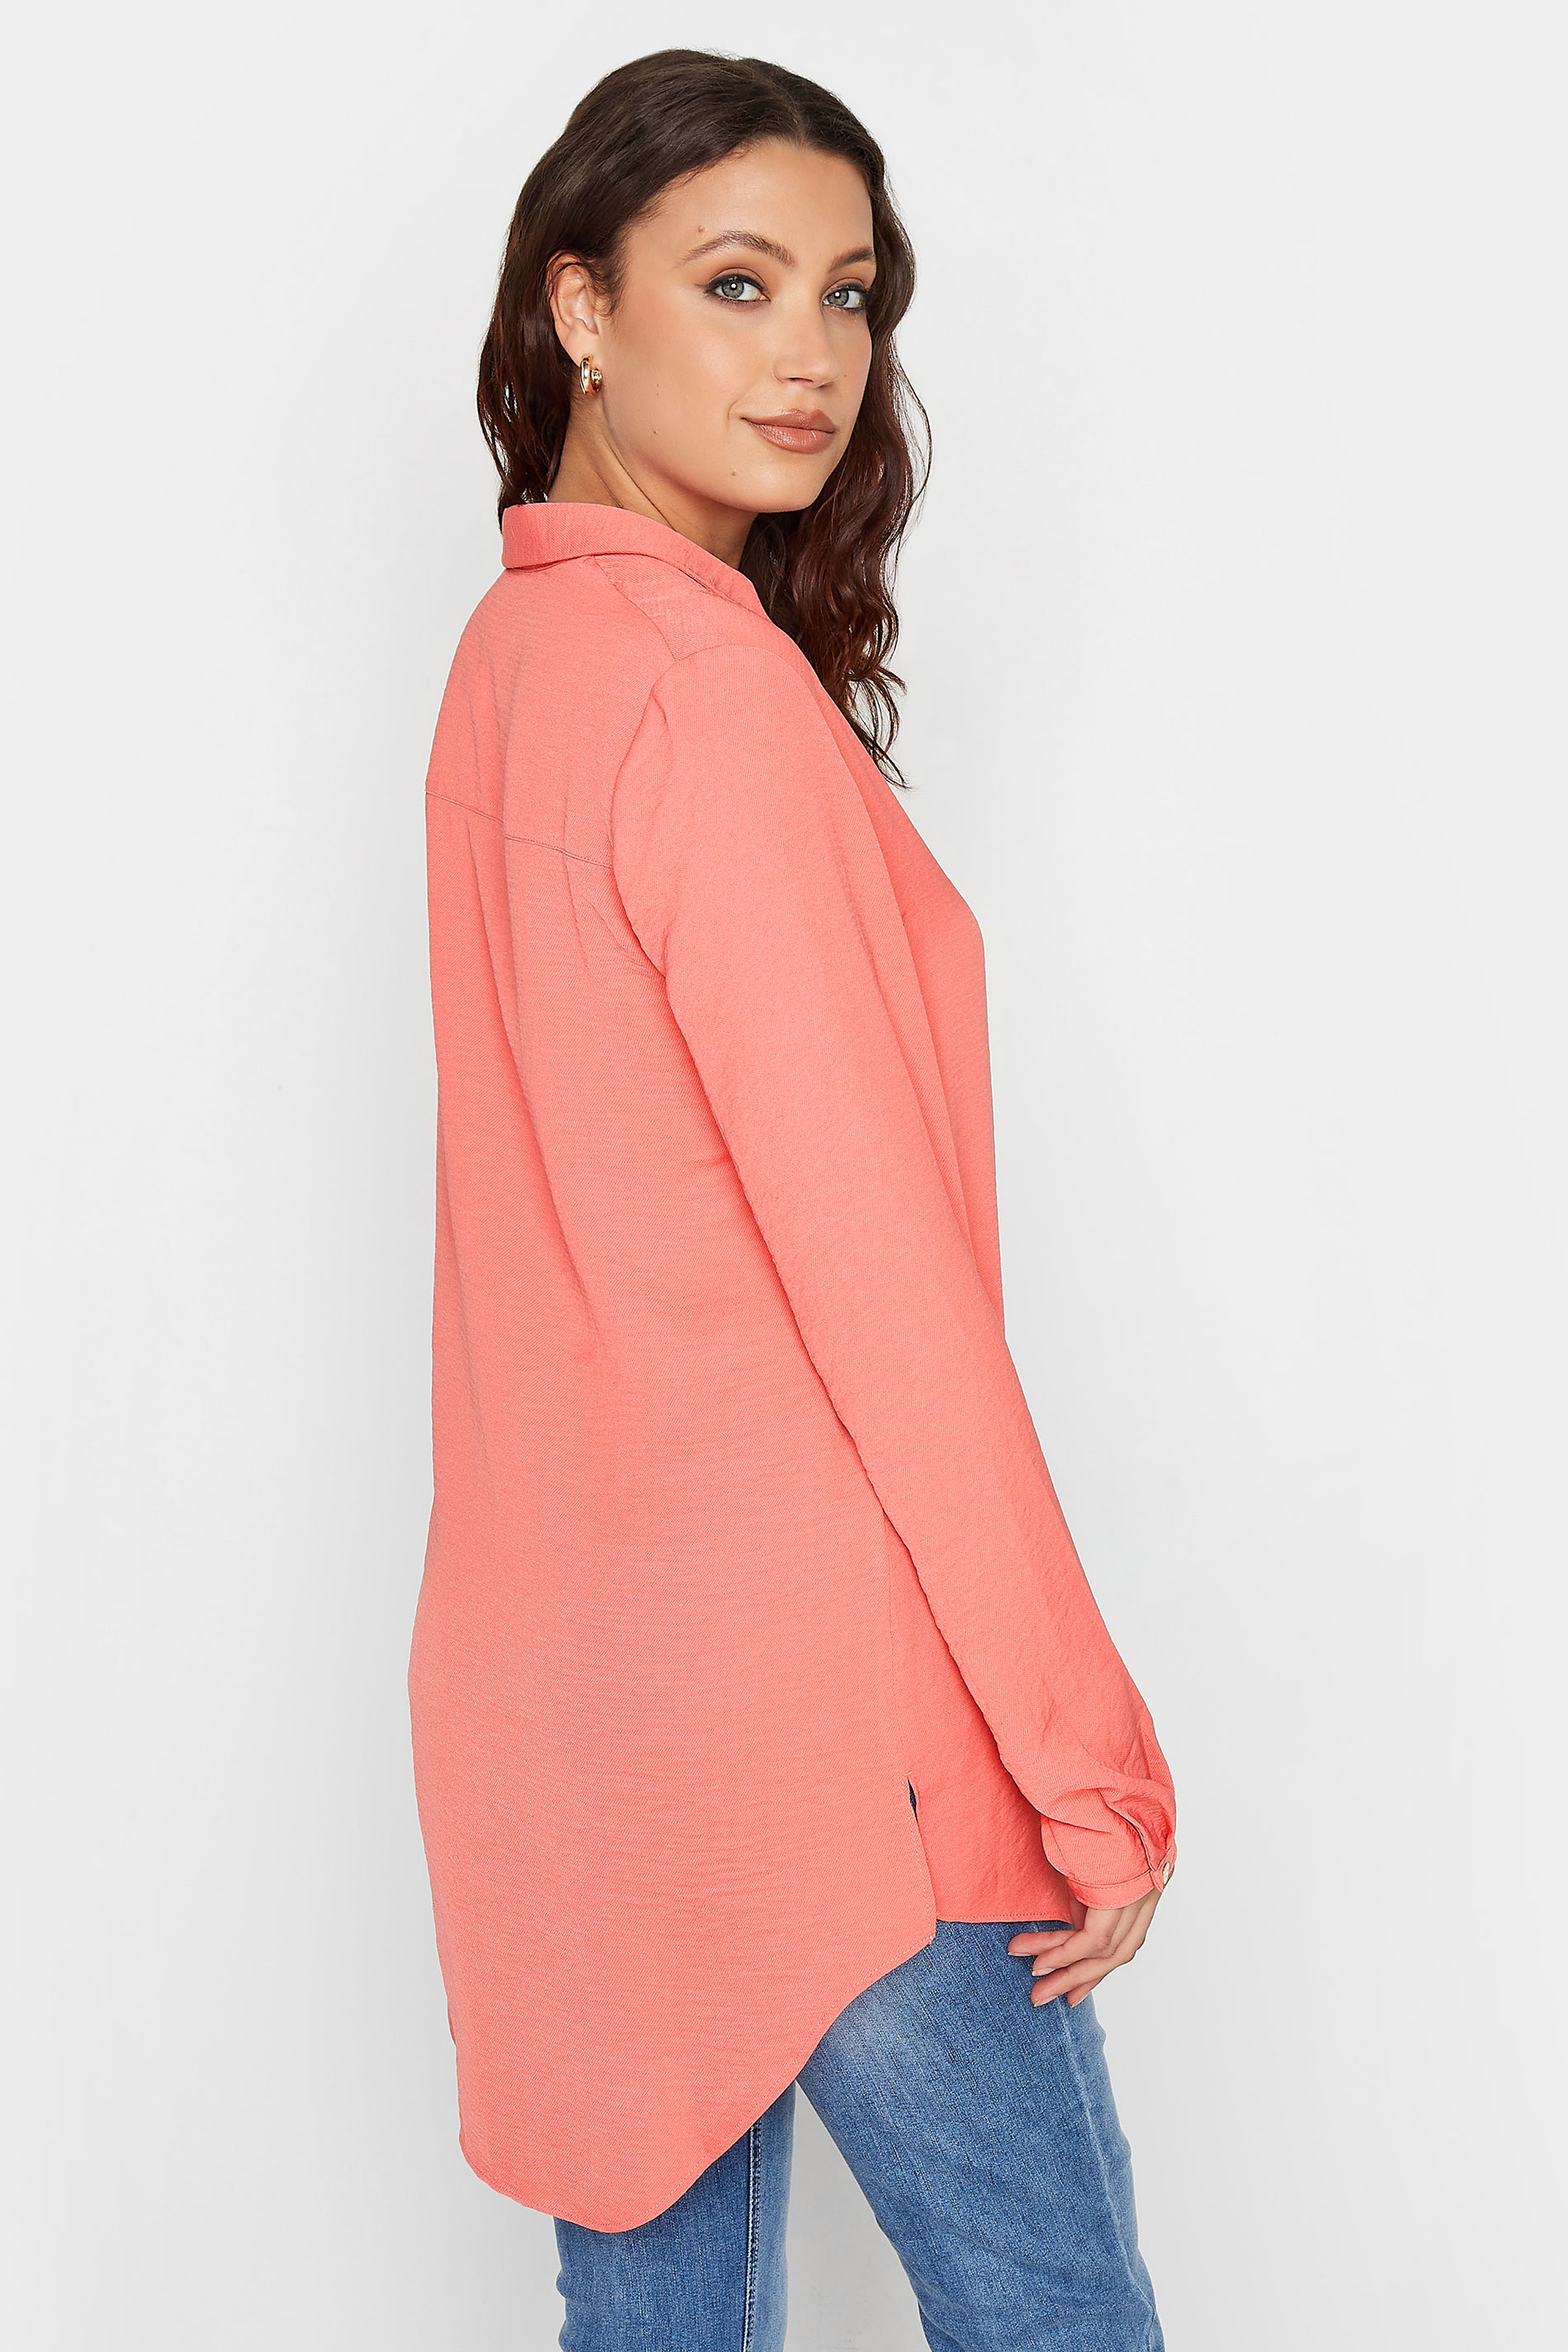 LTS Tall Women's Coral Pink V-Neck Twill Shirt | Long Tall Sally 3